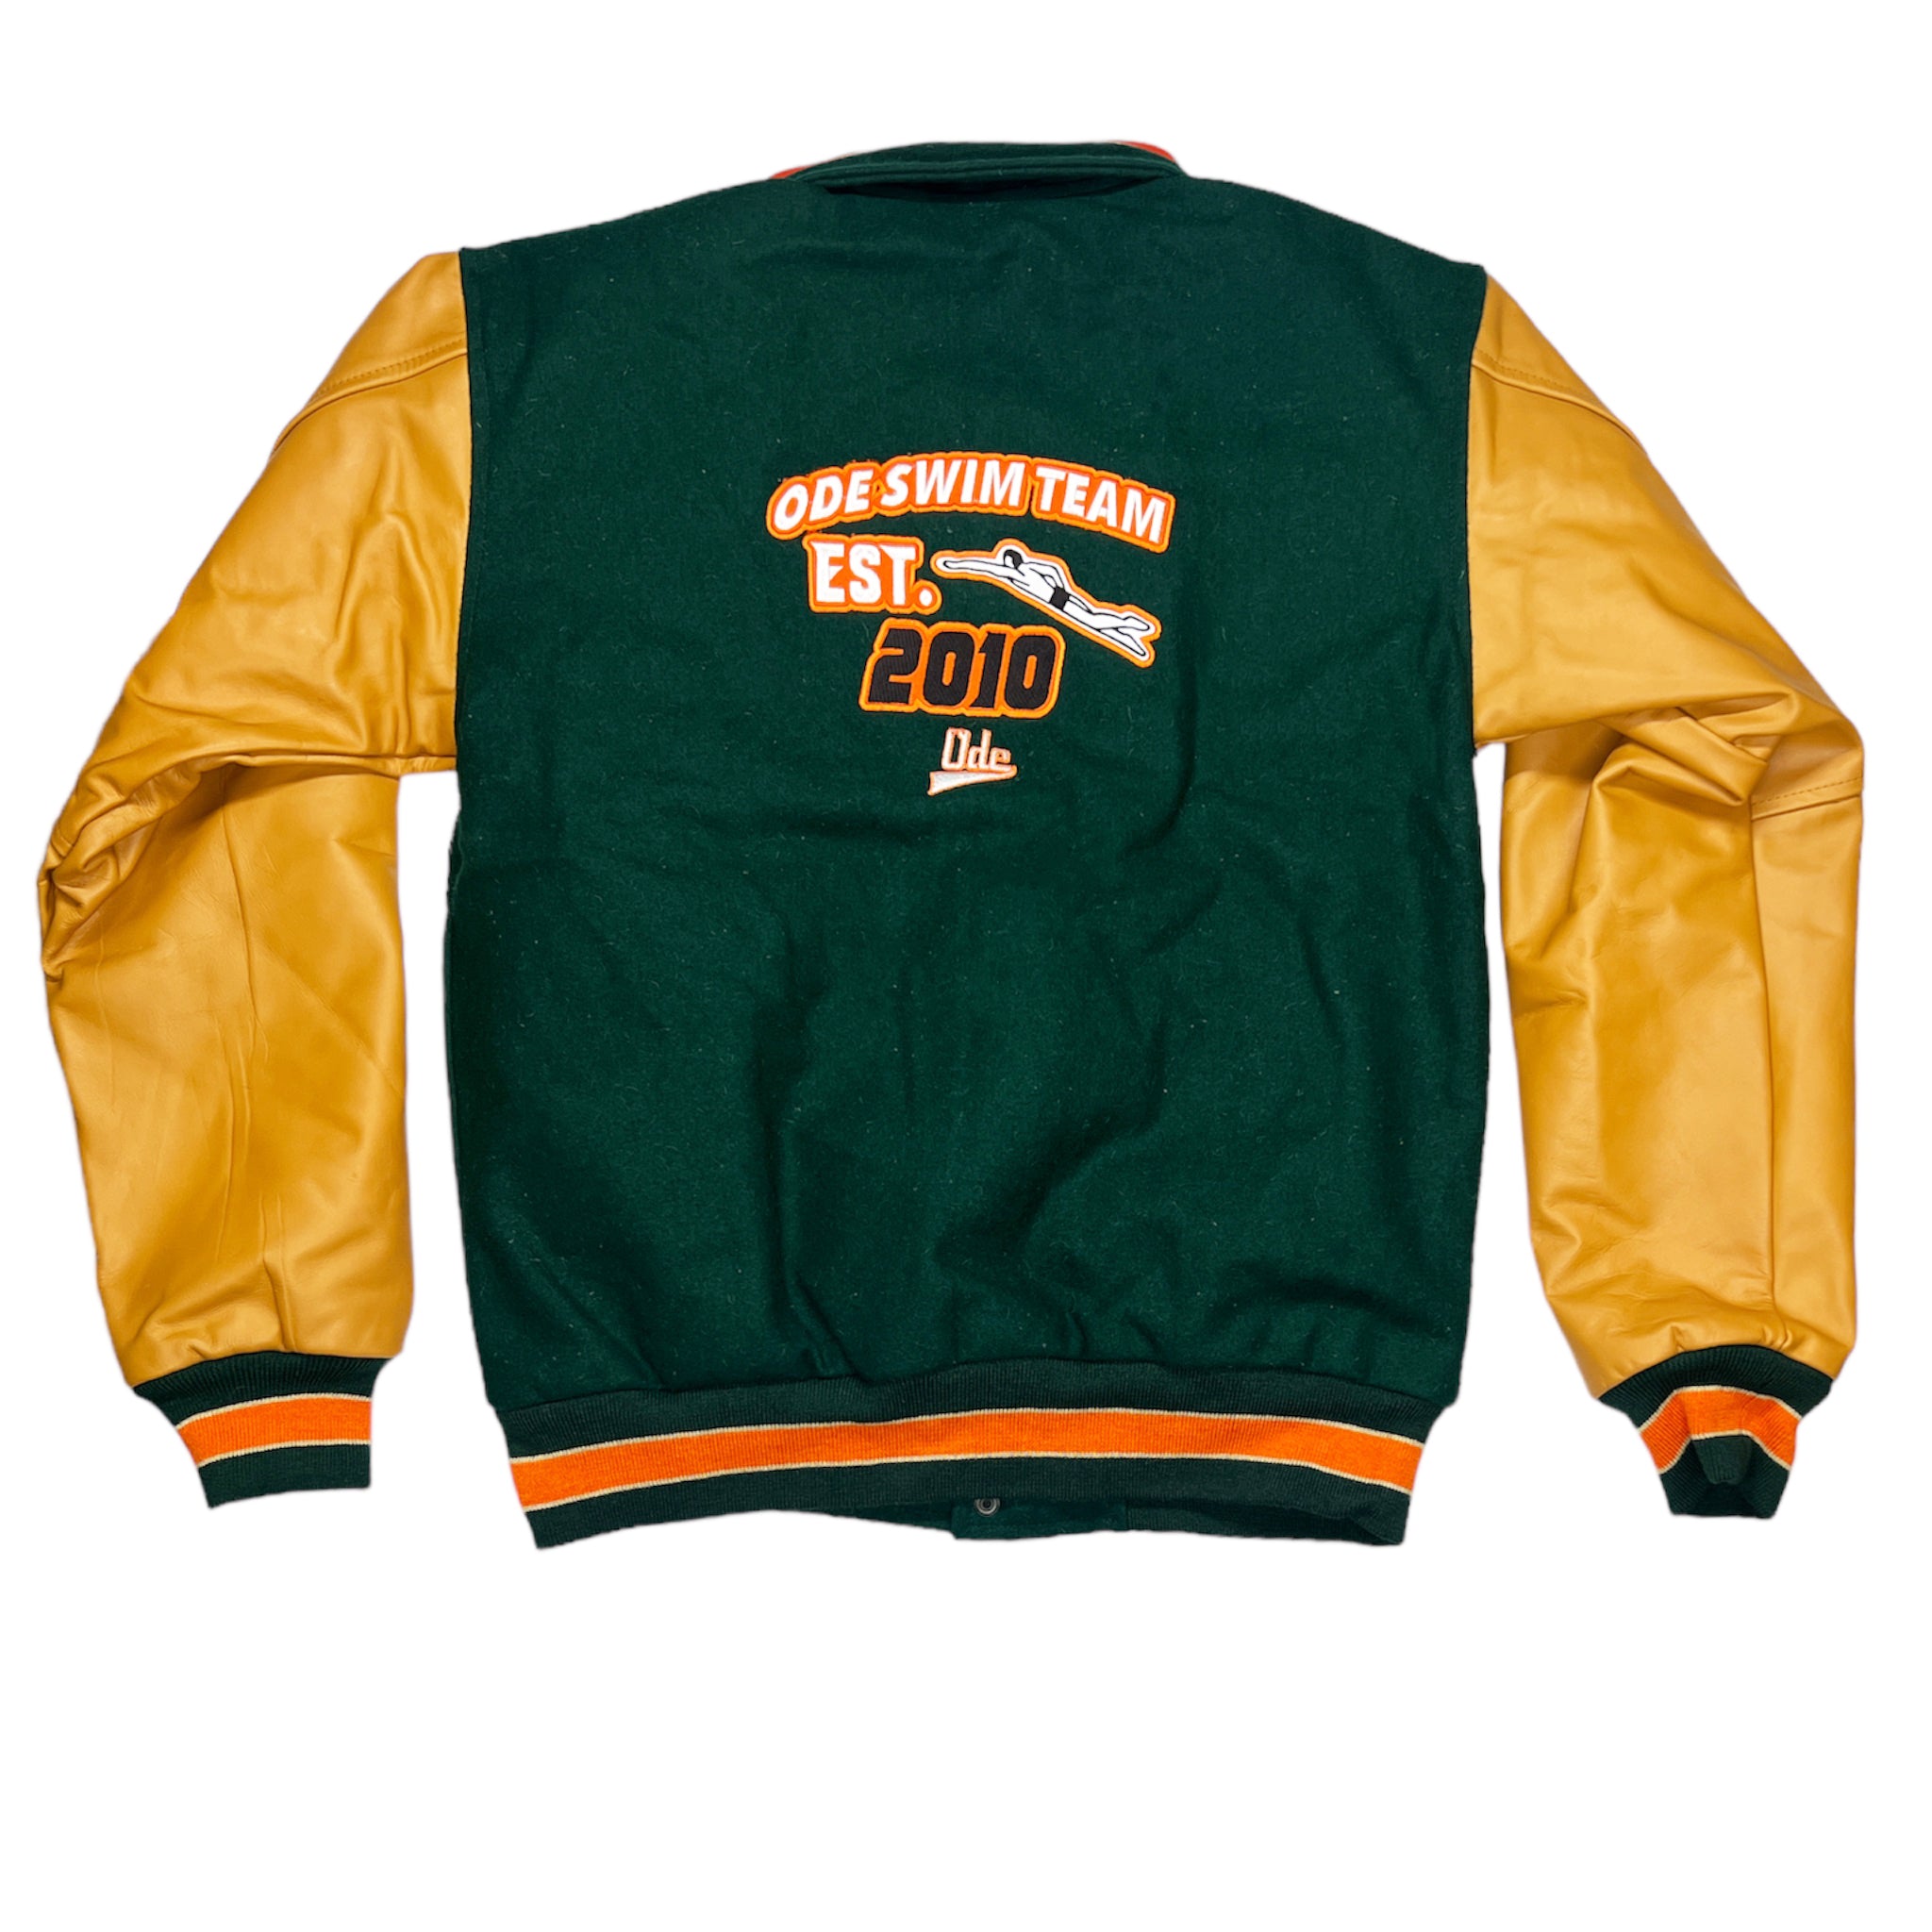 The ODE Swin Team Green & Orange Varsity Jacket